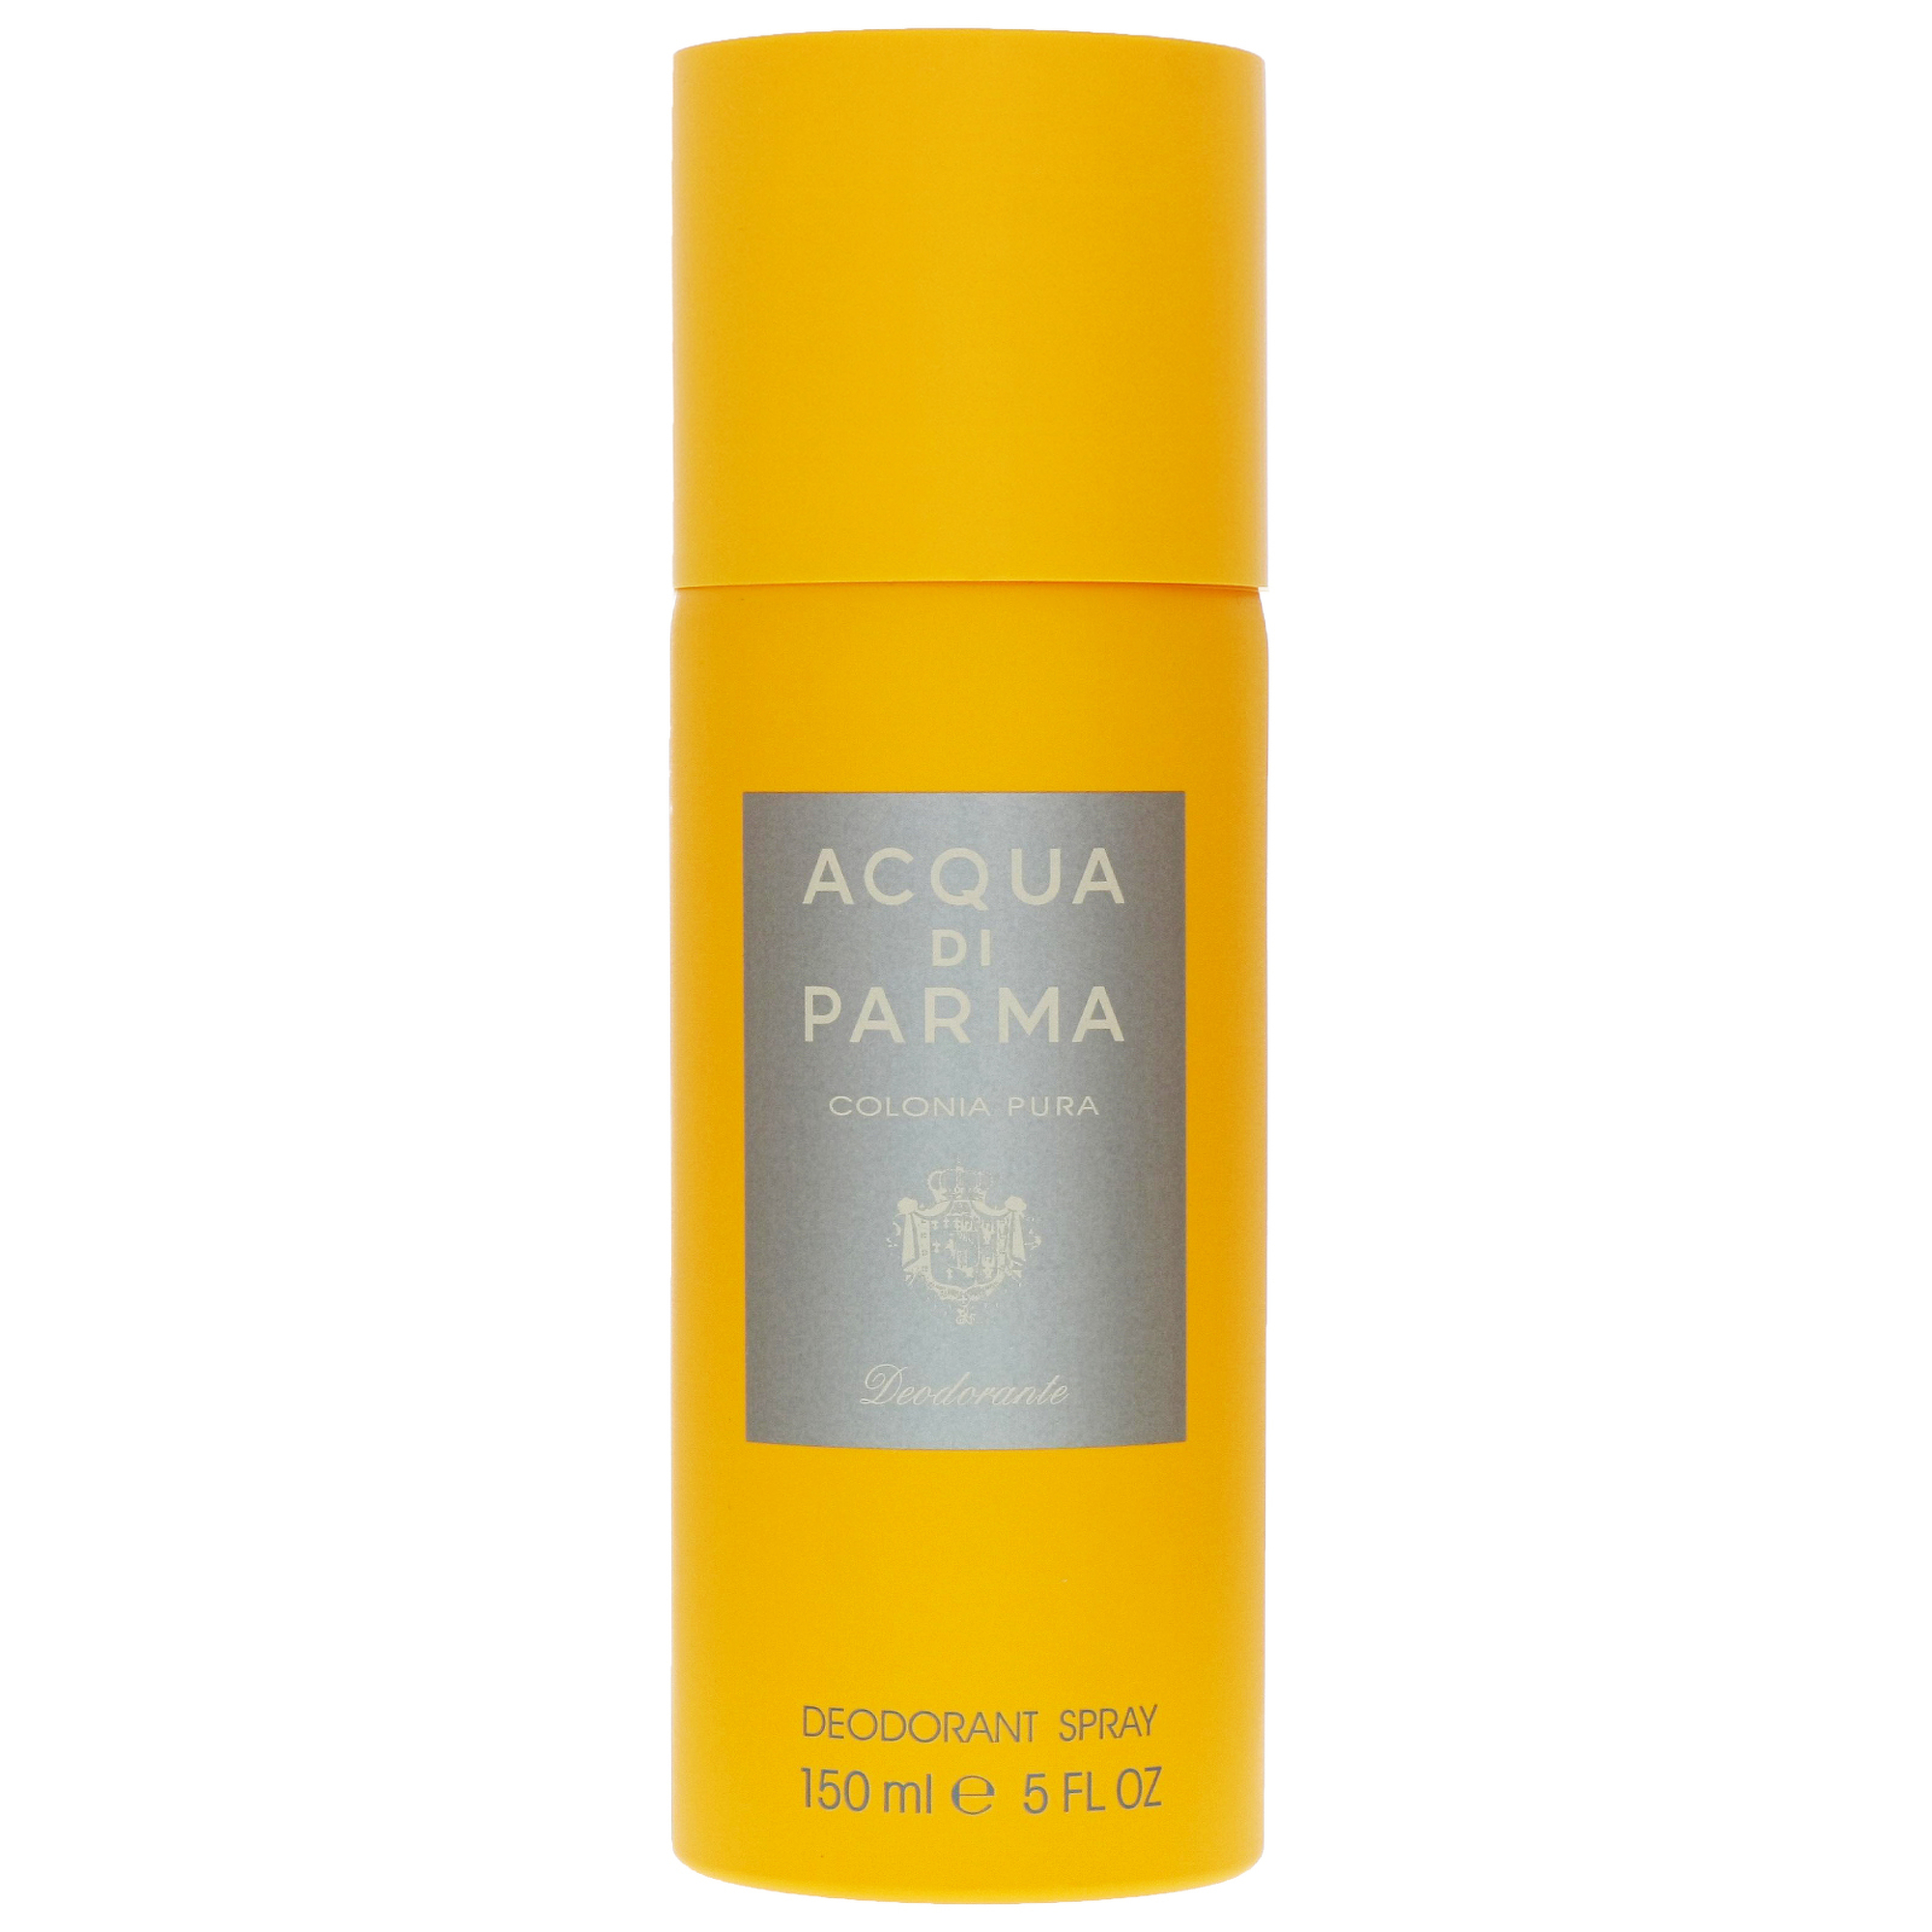 Photos - Women's Fragrance Acqua di Parma Colonia Pura Deodorant Spray 150ml 